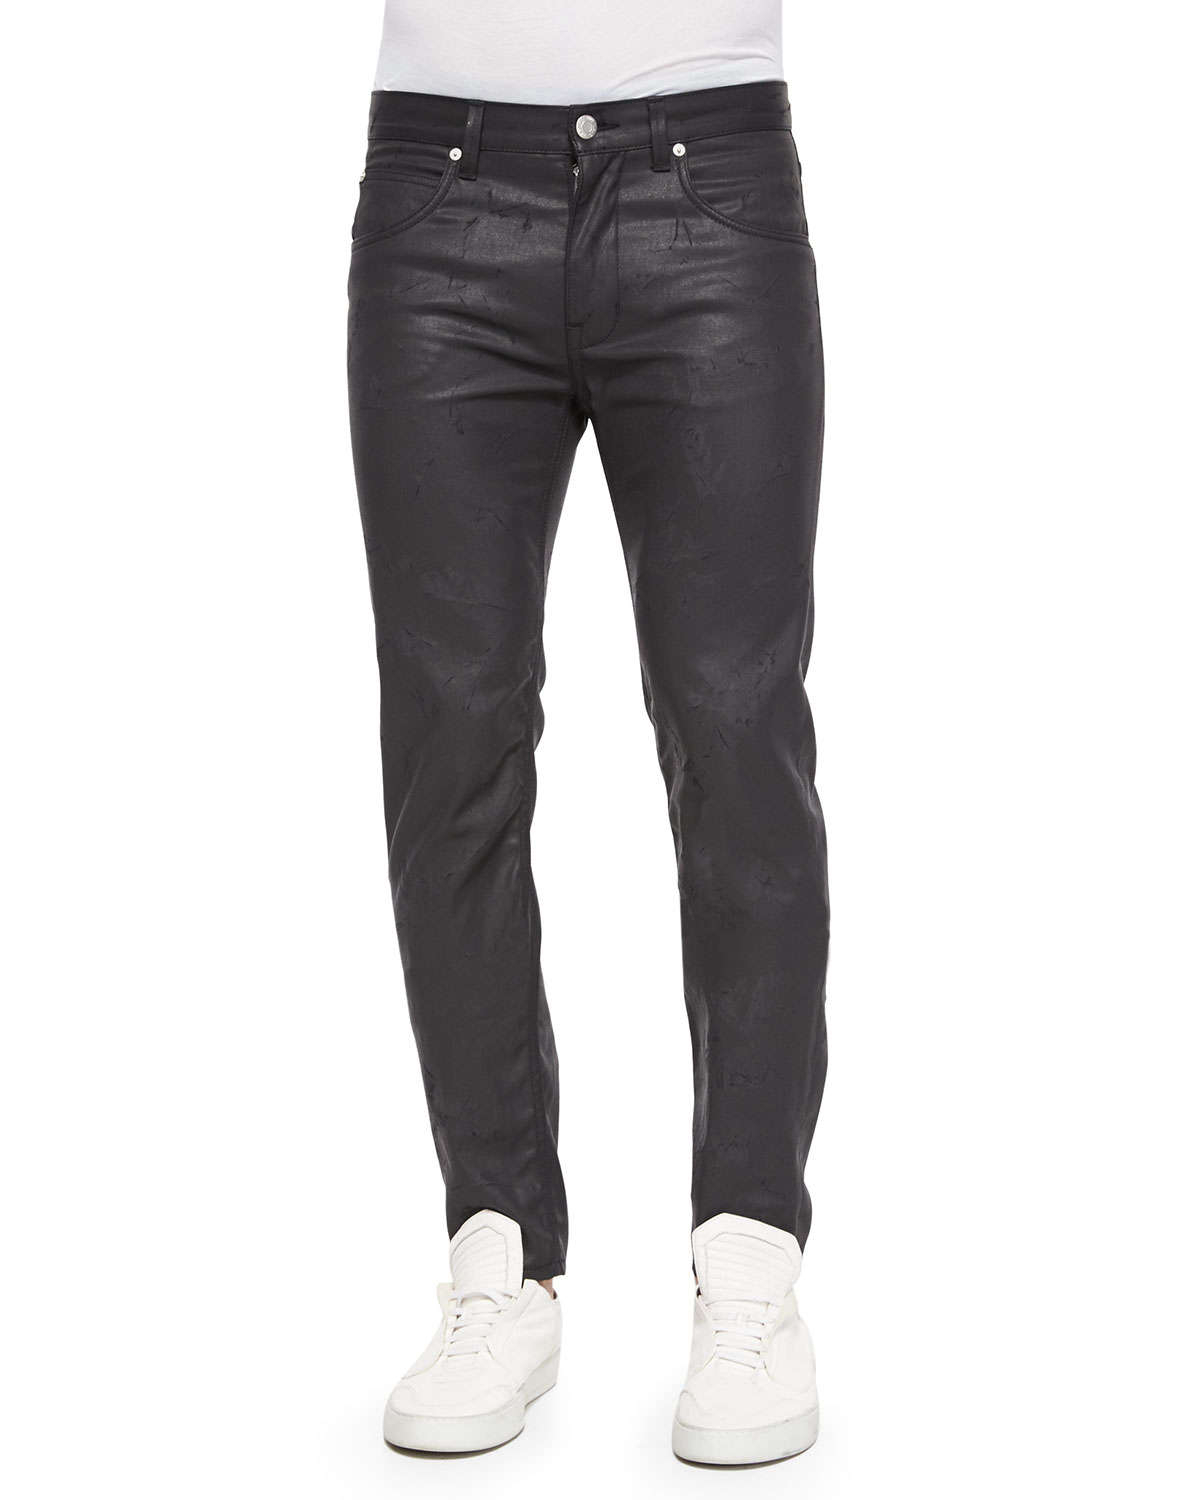 Helmut Lang Wax-coated Scratched Denim Jeans in Black for Men - Lyst